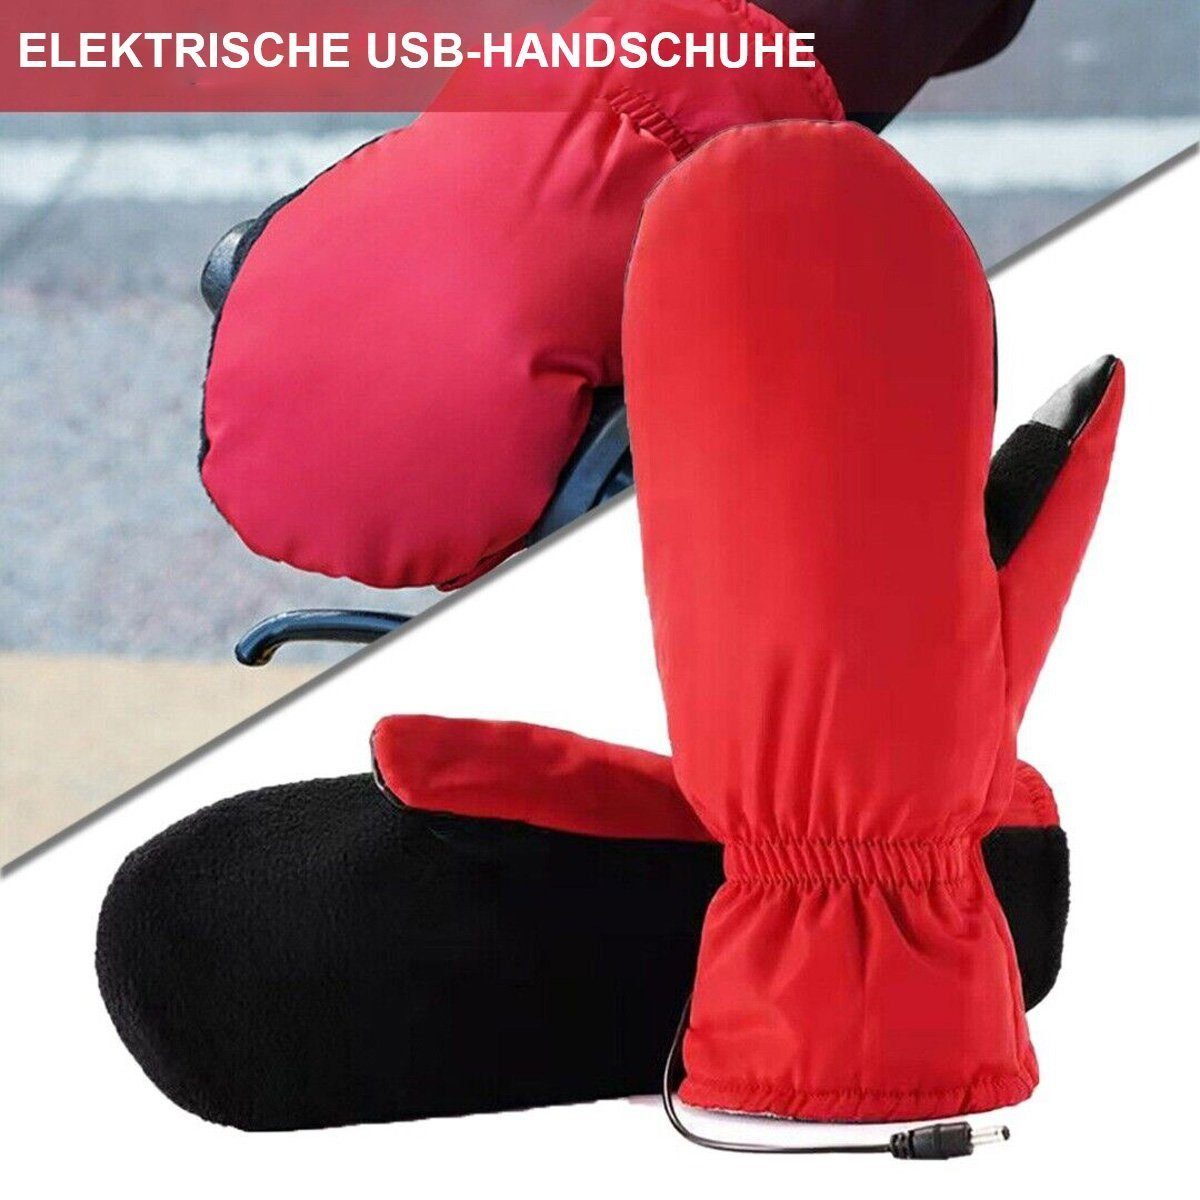 AUKUU Multisporthandschuhe Sporthandschuhe Lederhandschuhe Elektrisch rot Handschuhe beheizte